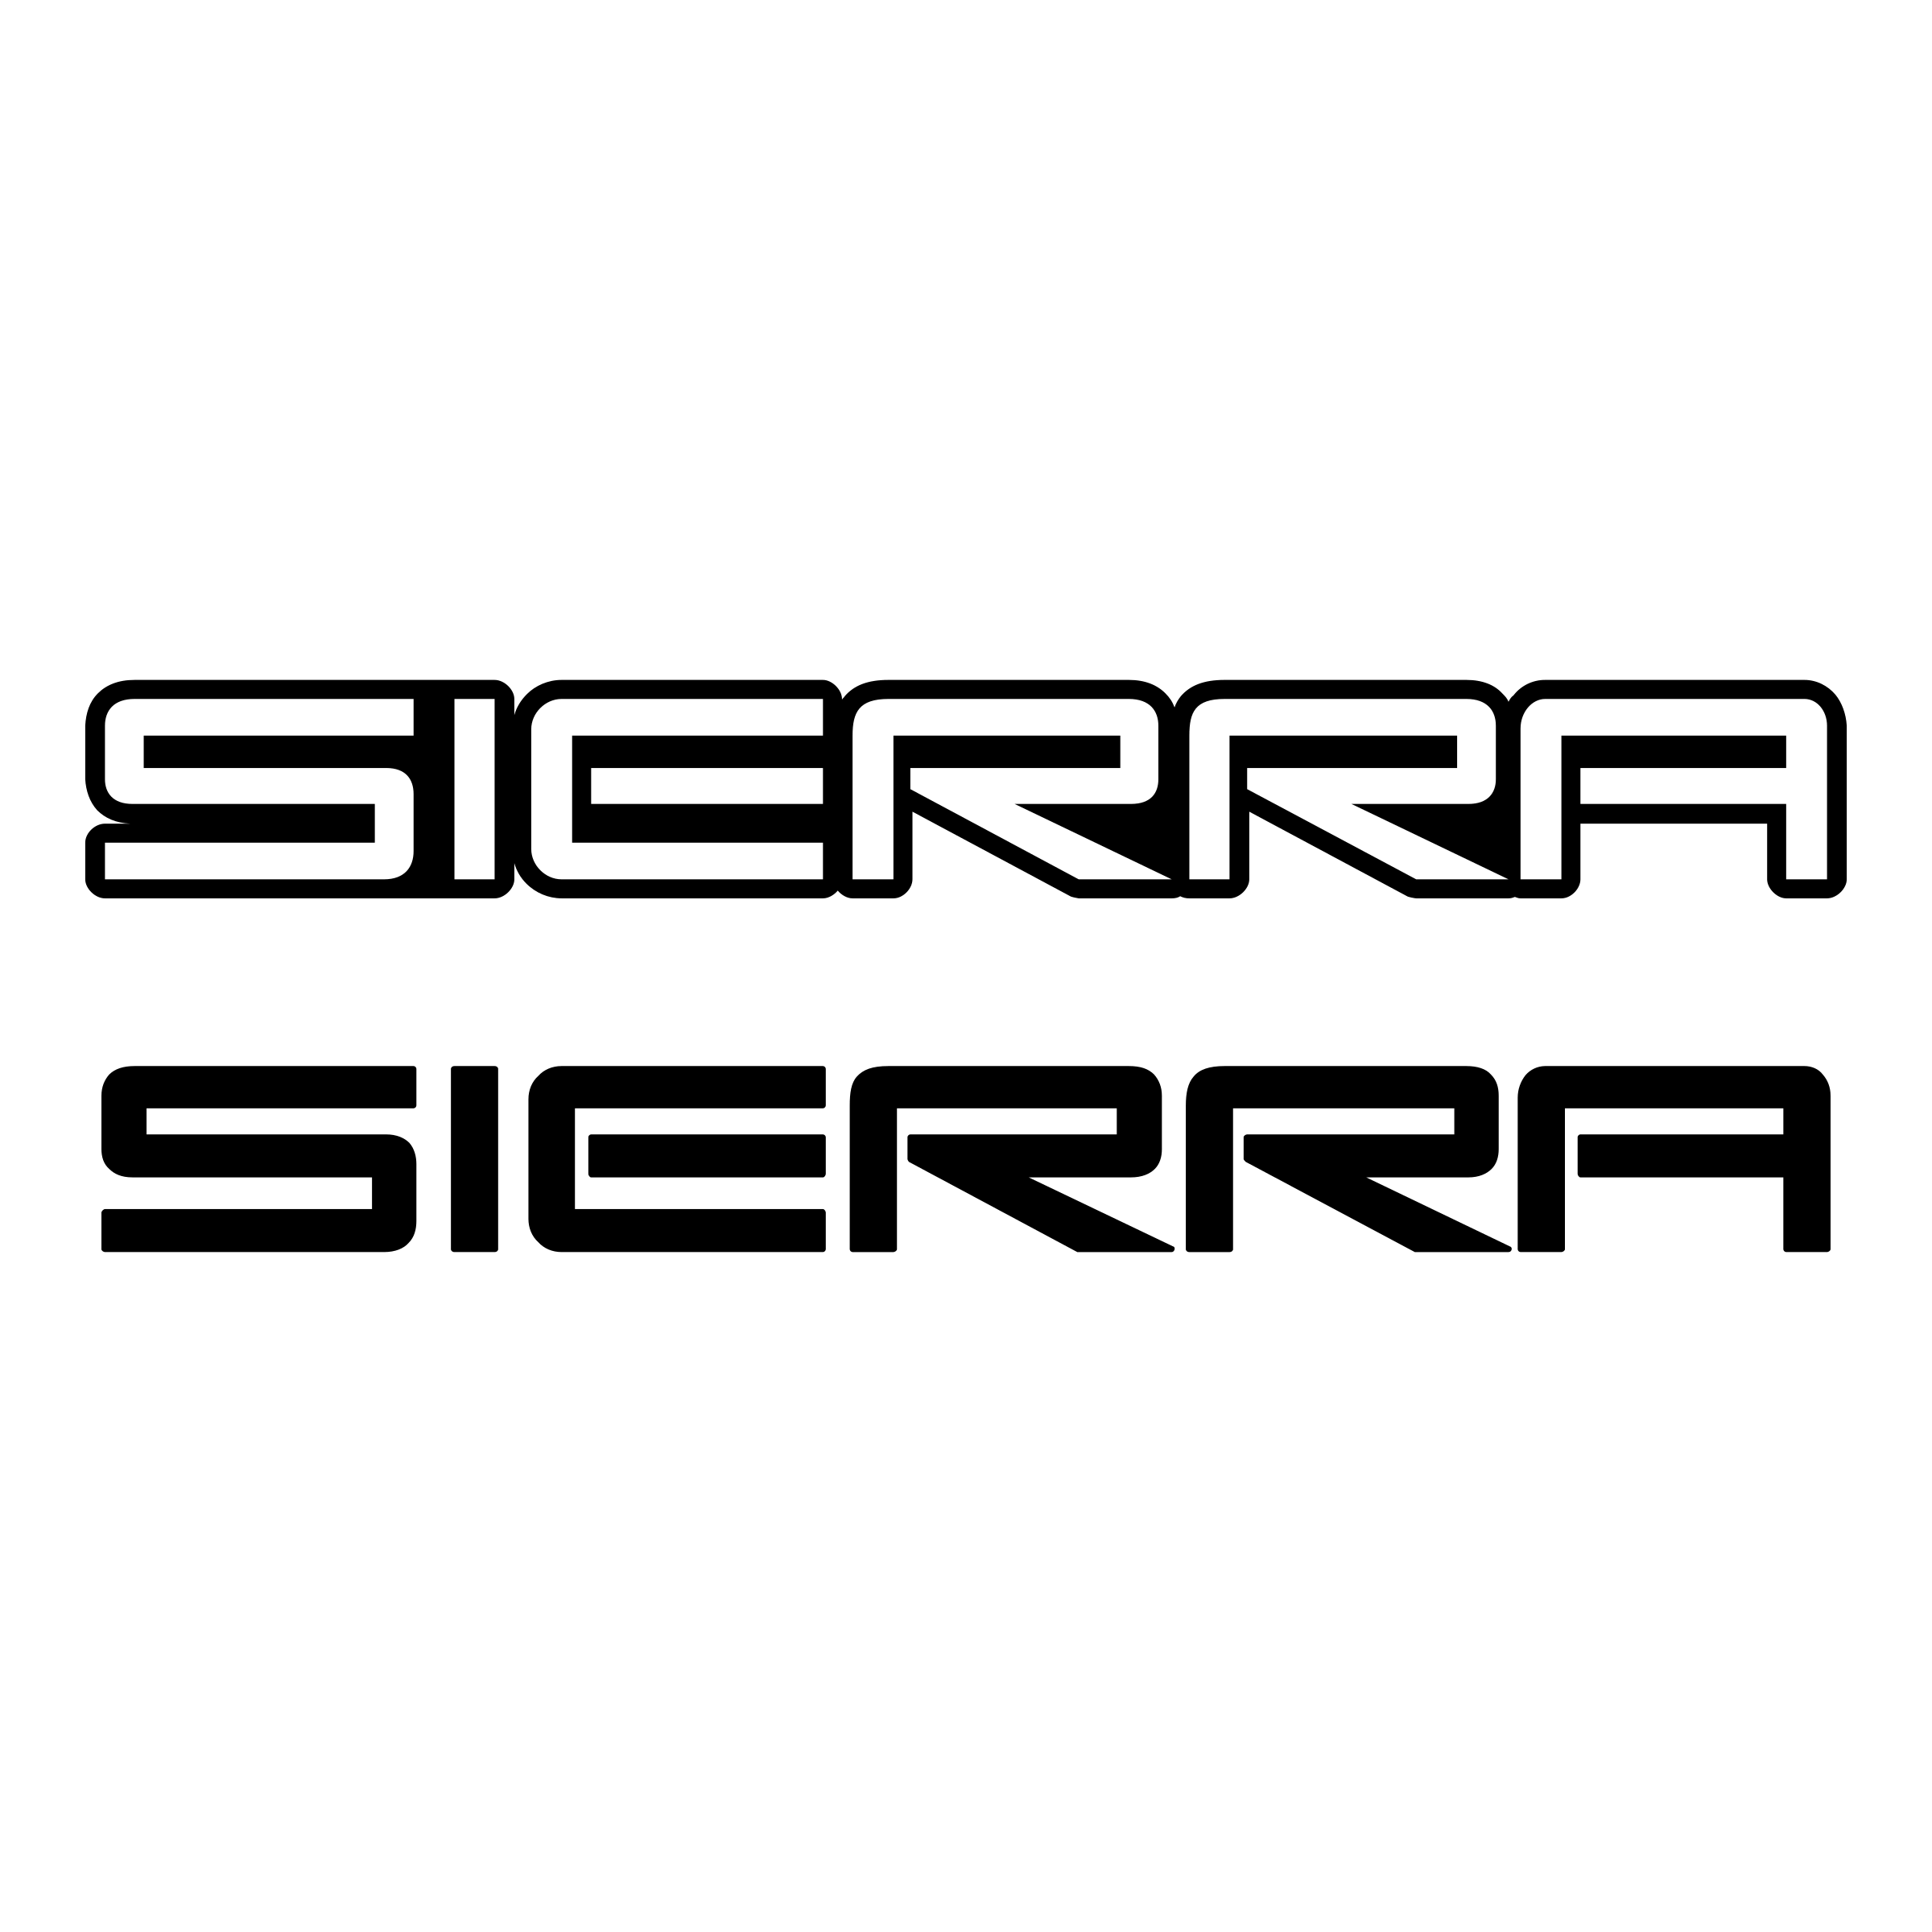 Seirra Logo - Sierra Logo PNG Transparent & SVG Vector